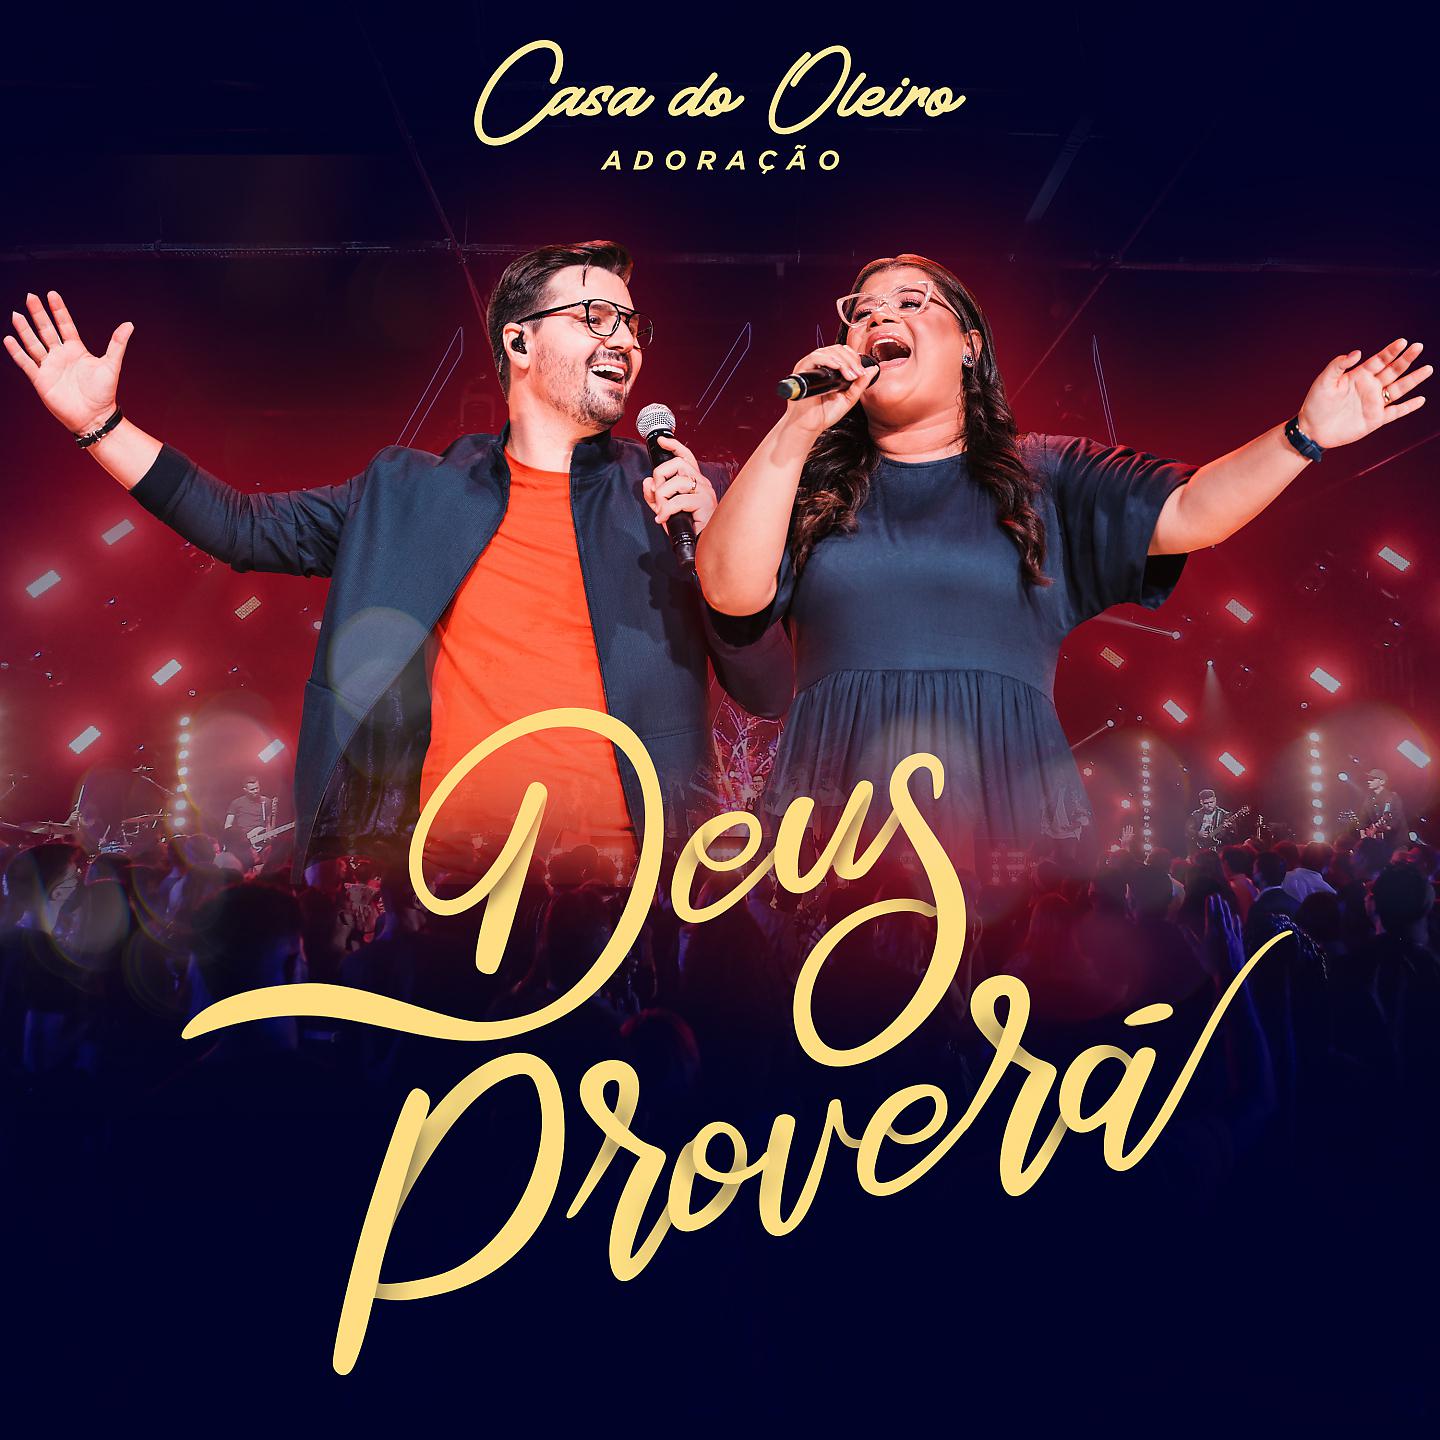 Постер альбома Deus Proverá